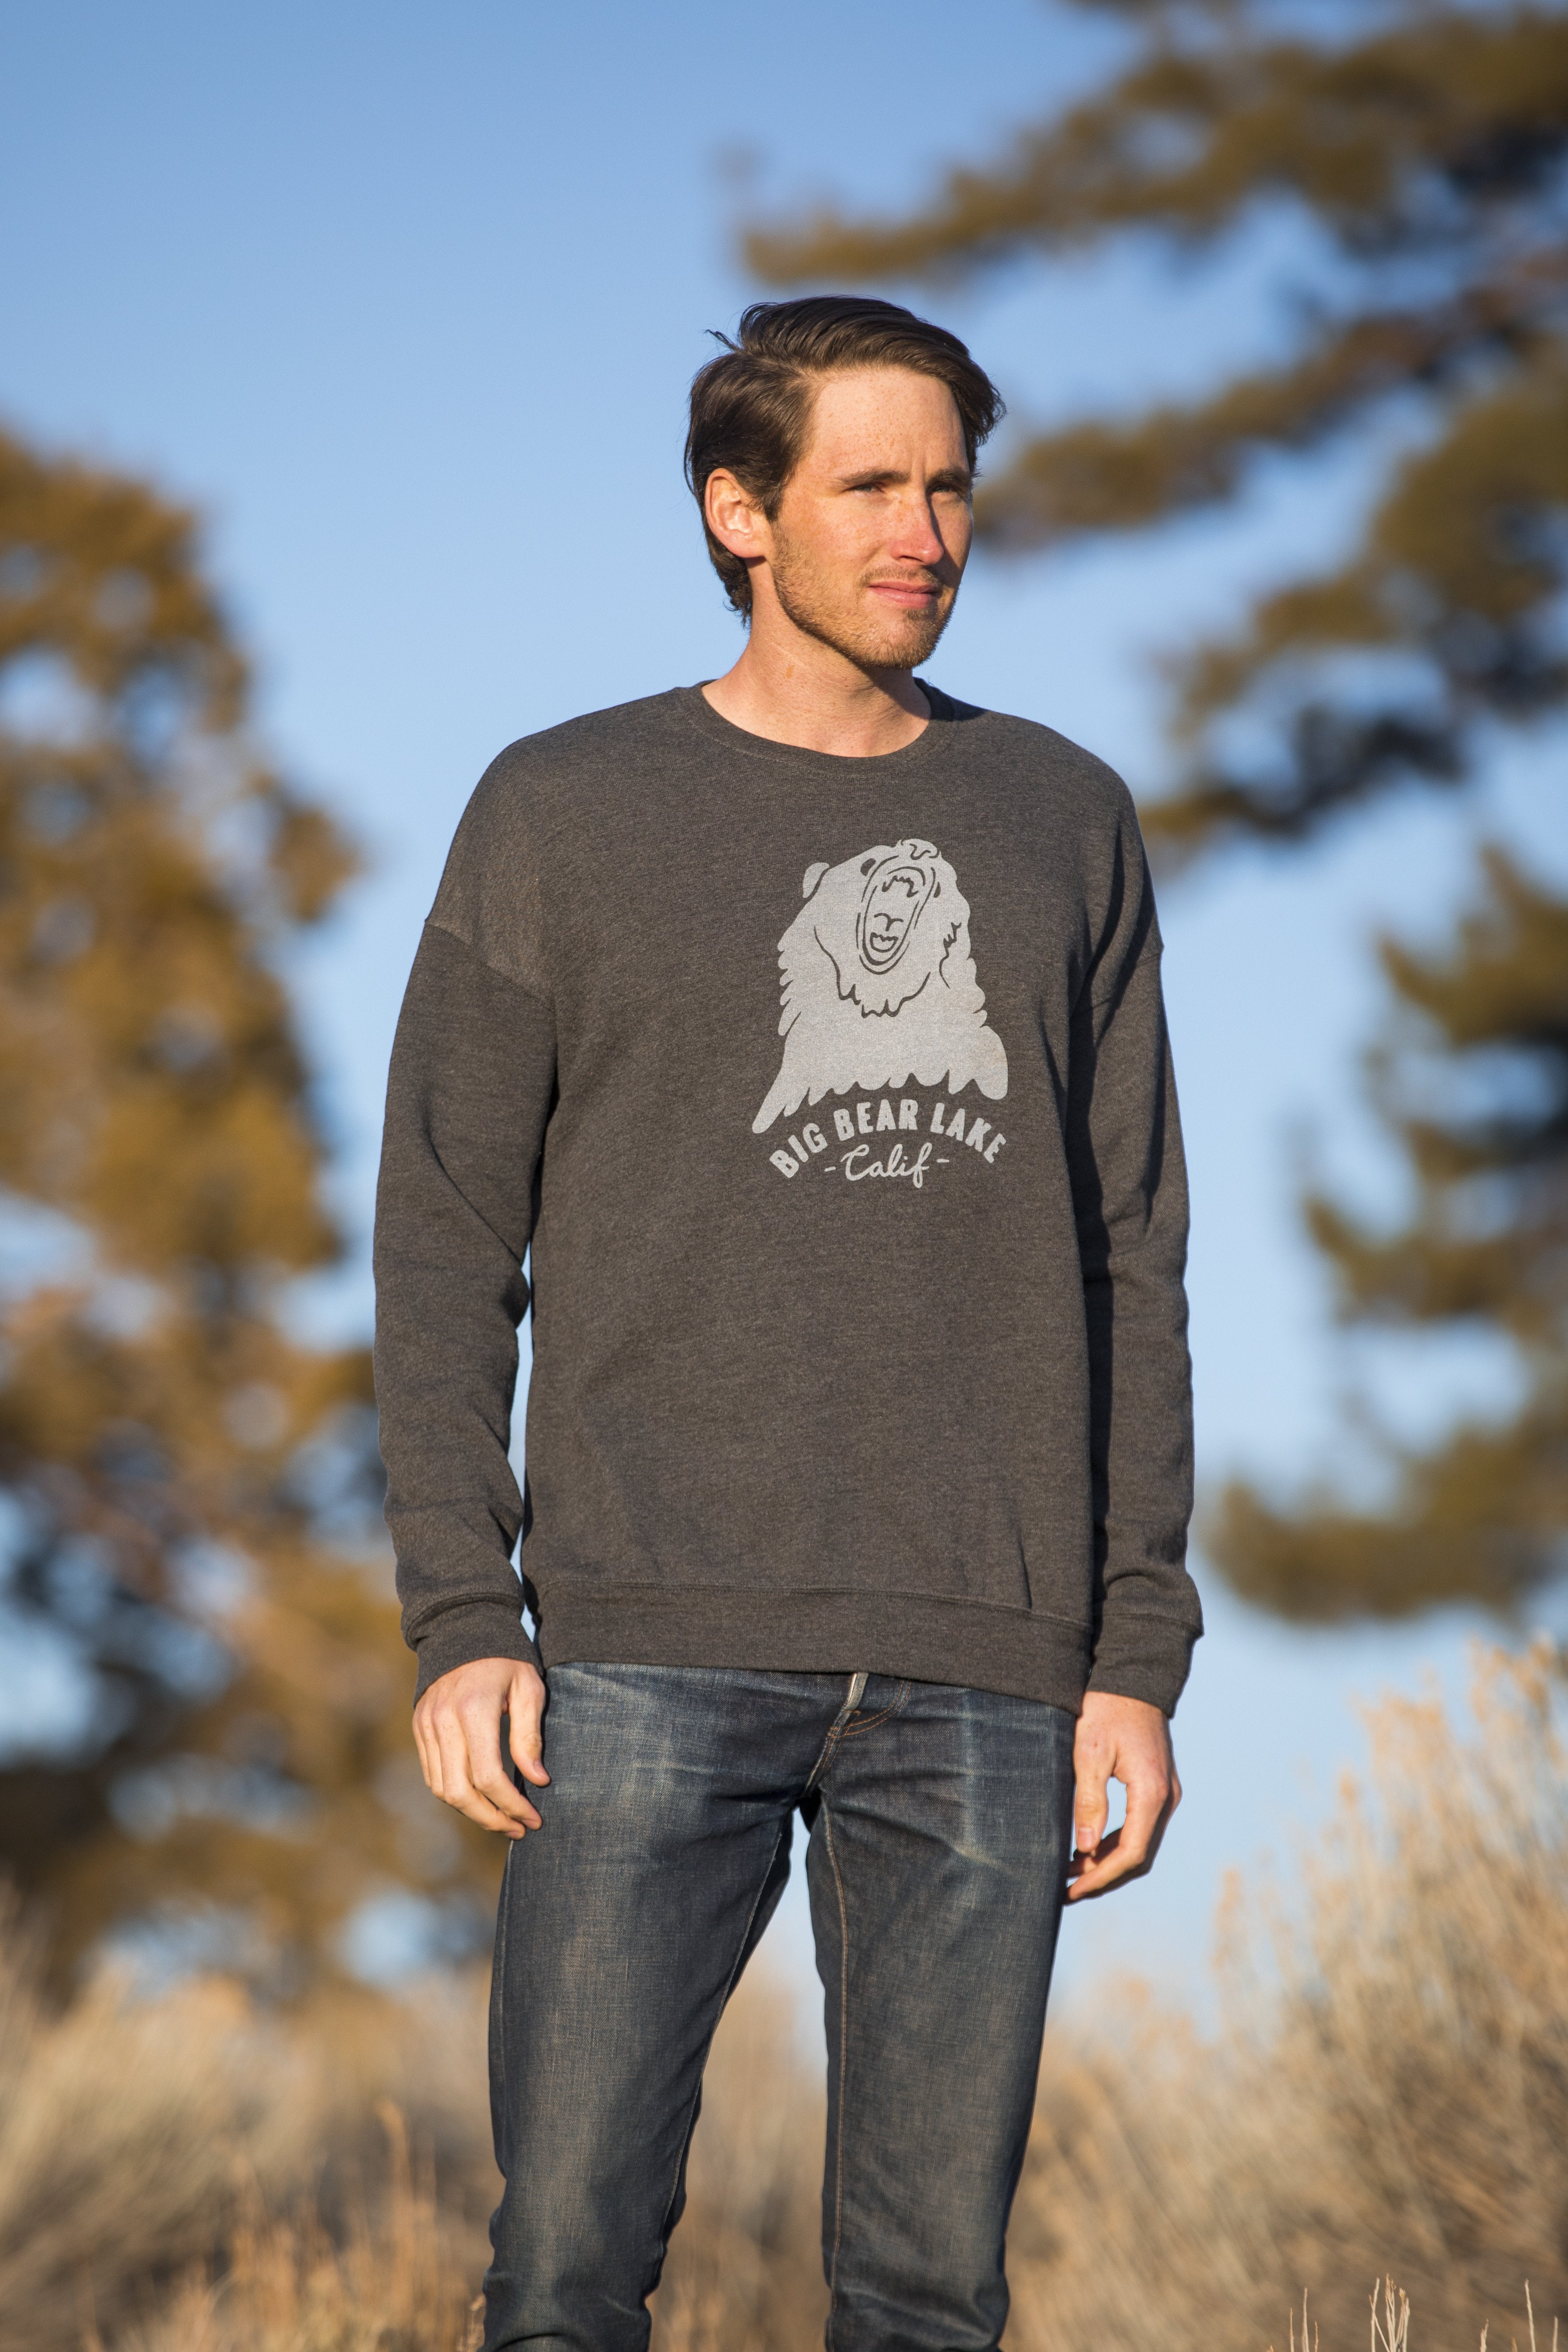 Big Bear Lake Souvenir Drop Shoulder Sweater - Dark Grey - Custom Logo - Big Bear Lake Logo - Unisex Sweatshirt - Cozy - Women's Clothing Store - O KOO RAN - Big Bear Lake California